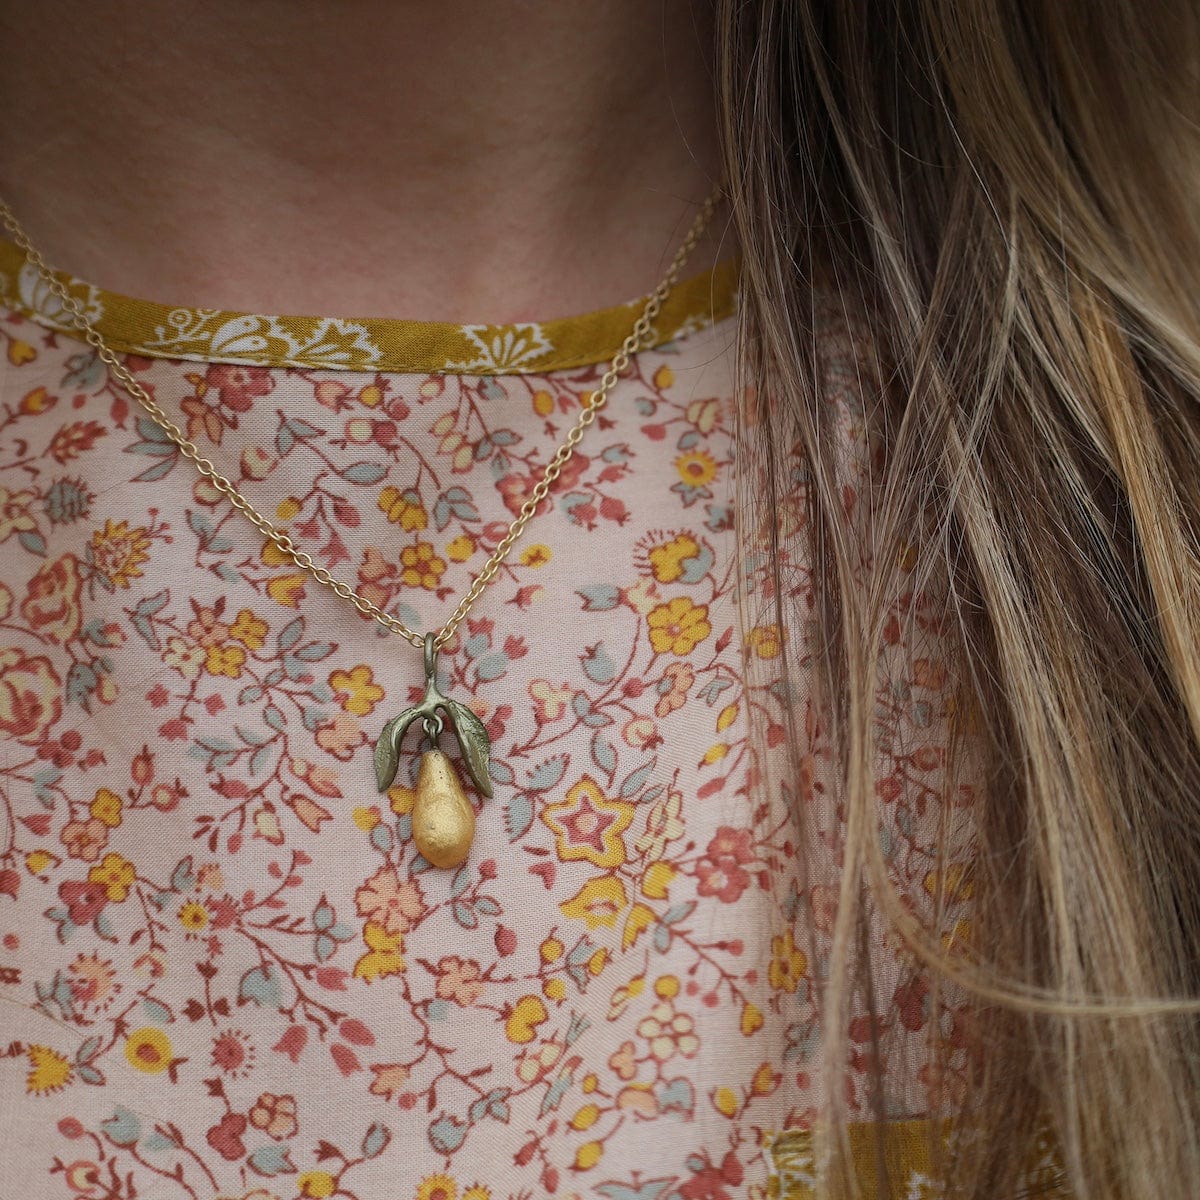 NKL Golden Pear Pendant Necklace